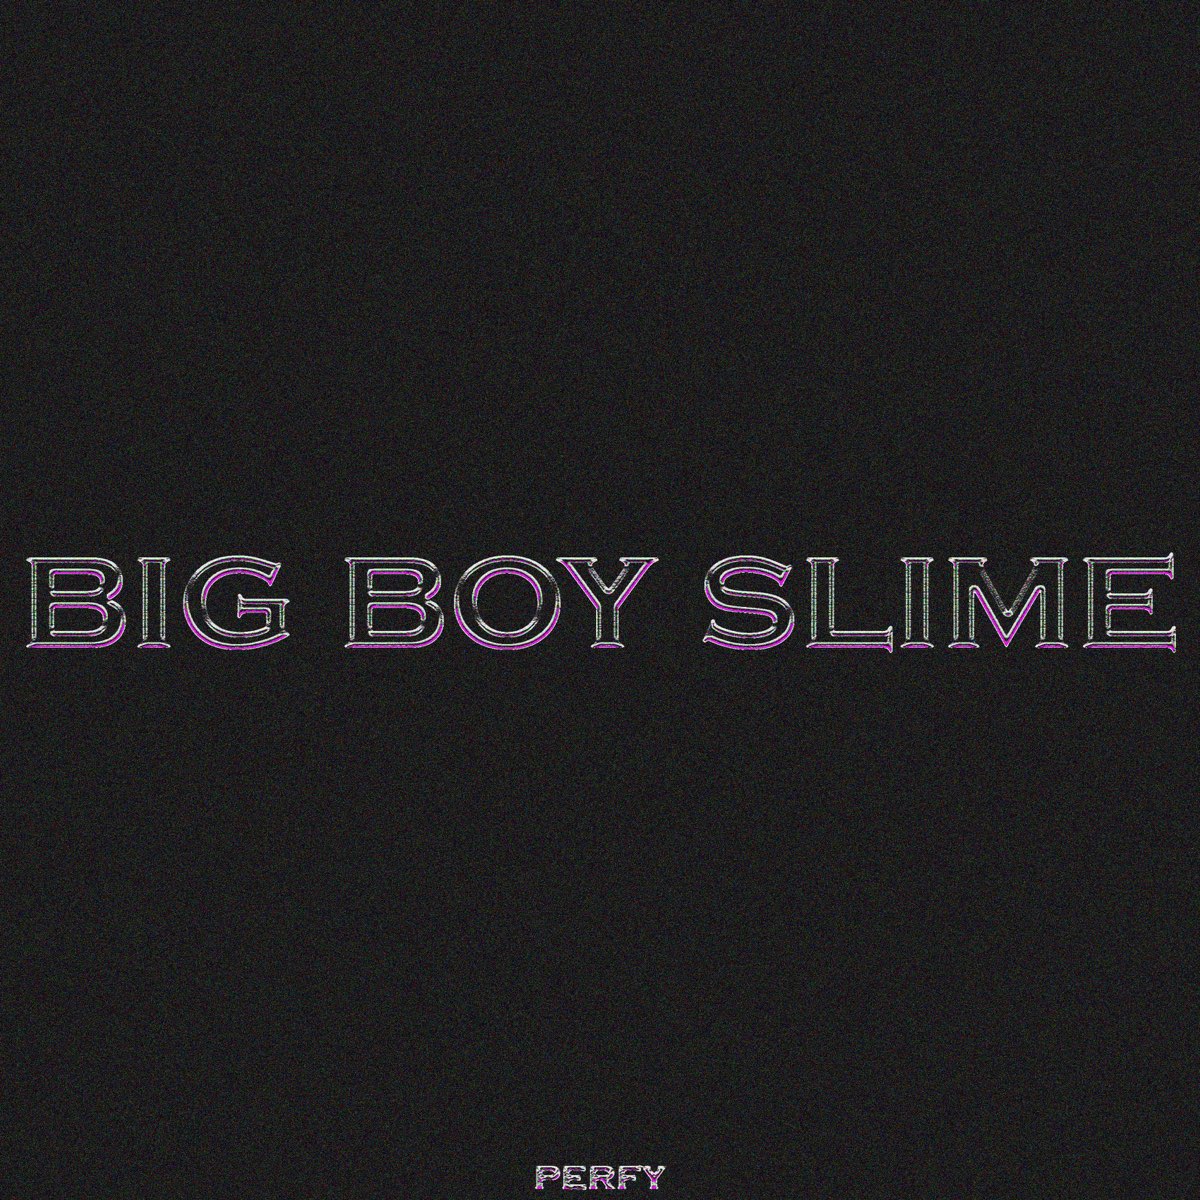 Песня слайм текст. Slime boy репер. Песня Биг бойс. Слова песни big boy Slime. Slime boy mimef послушать песню.